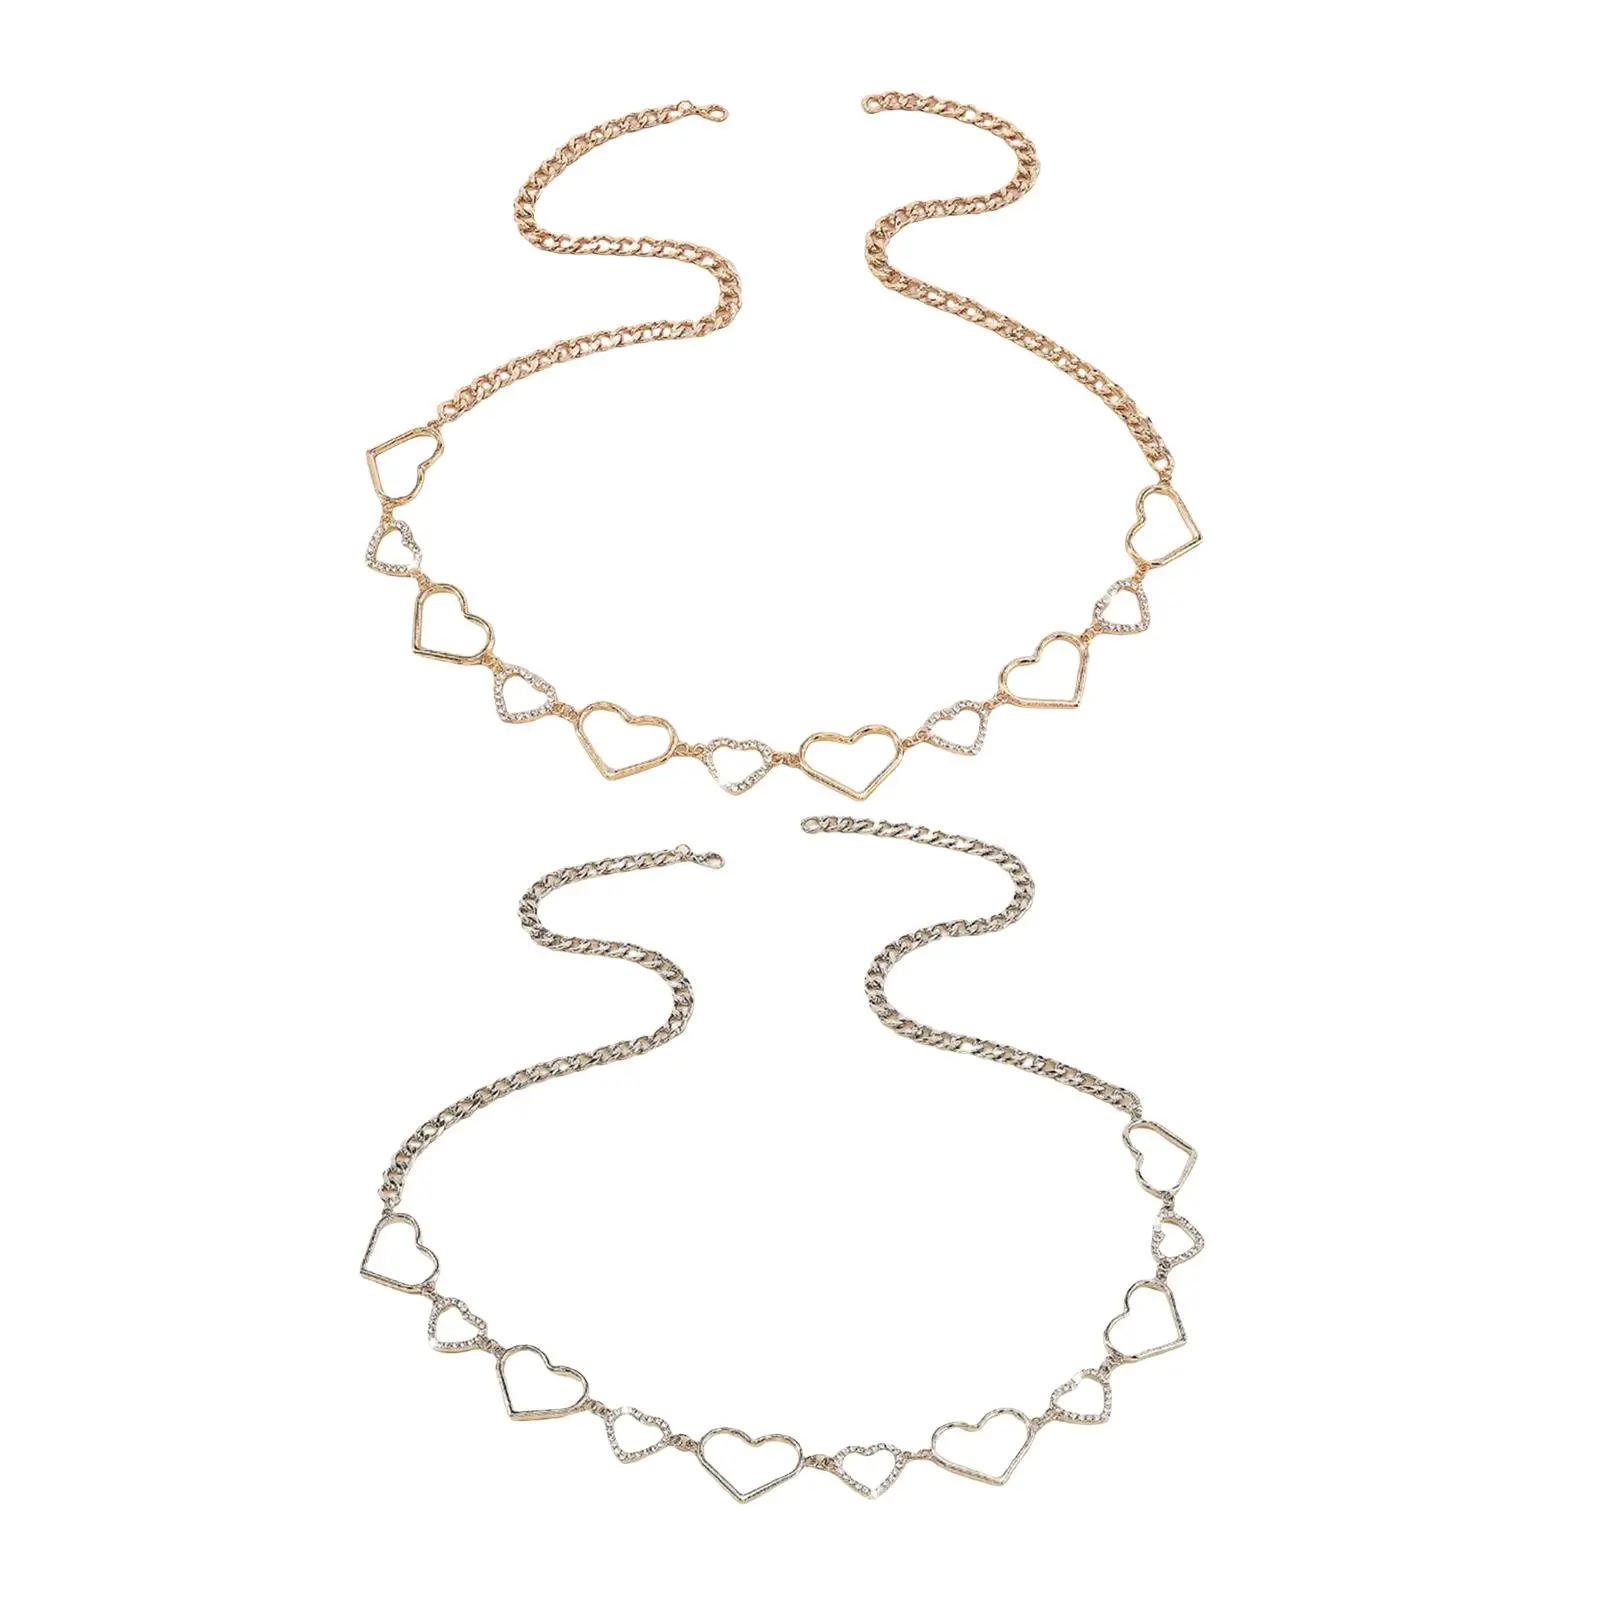 Fashion Women Waist Chain Belt Rhinestone Crystal Adjustable Heart Decorative Body Link for Beach Outfit Girls Pants